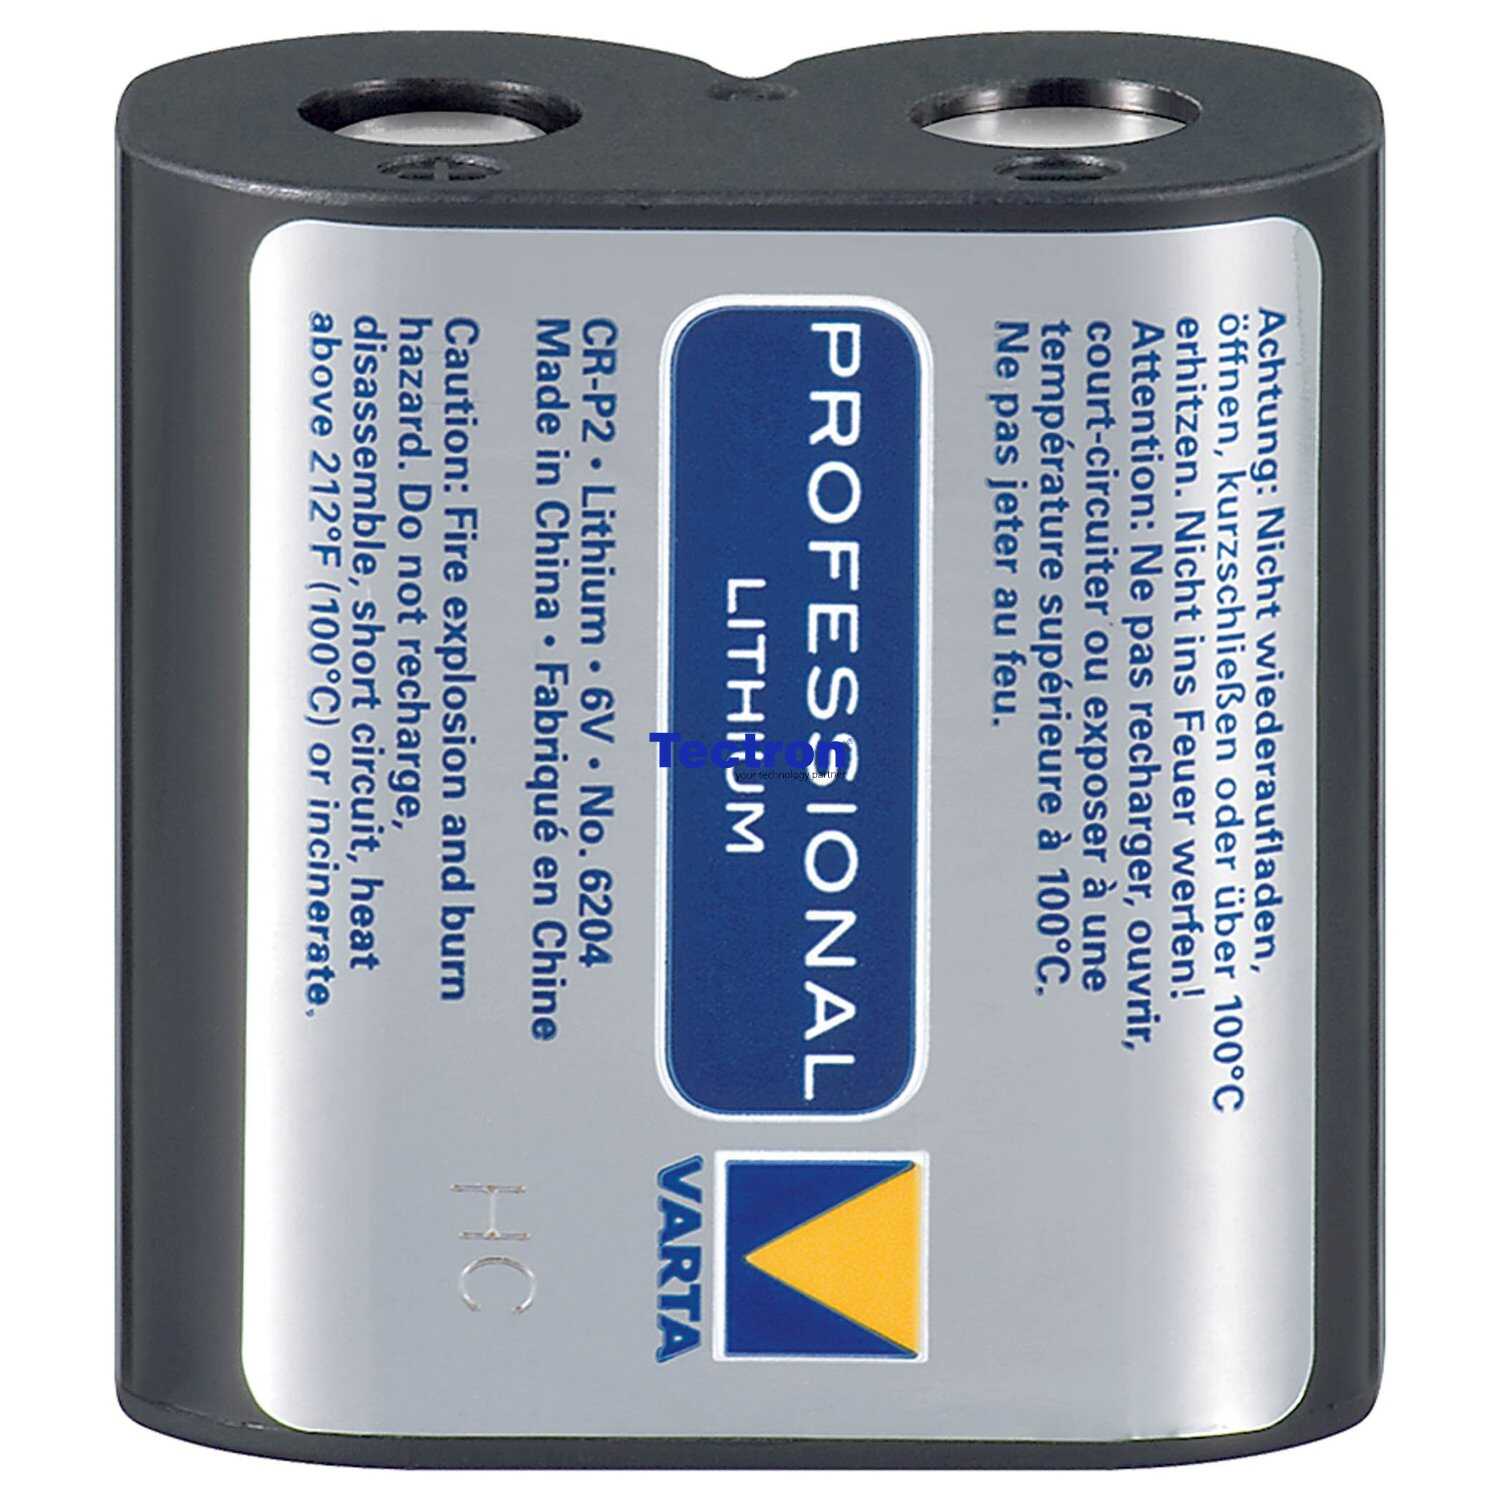 Battery 2. Varta CR-p2. Батарейка 6v Тип CR-p2. Батарея литиевая CR-p2 6в. Элемент питания CR p2 литиевый.